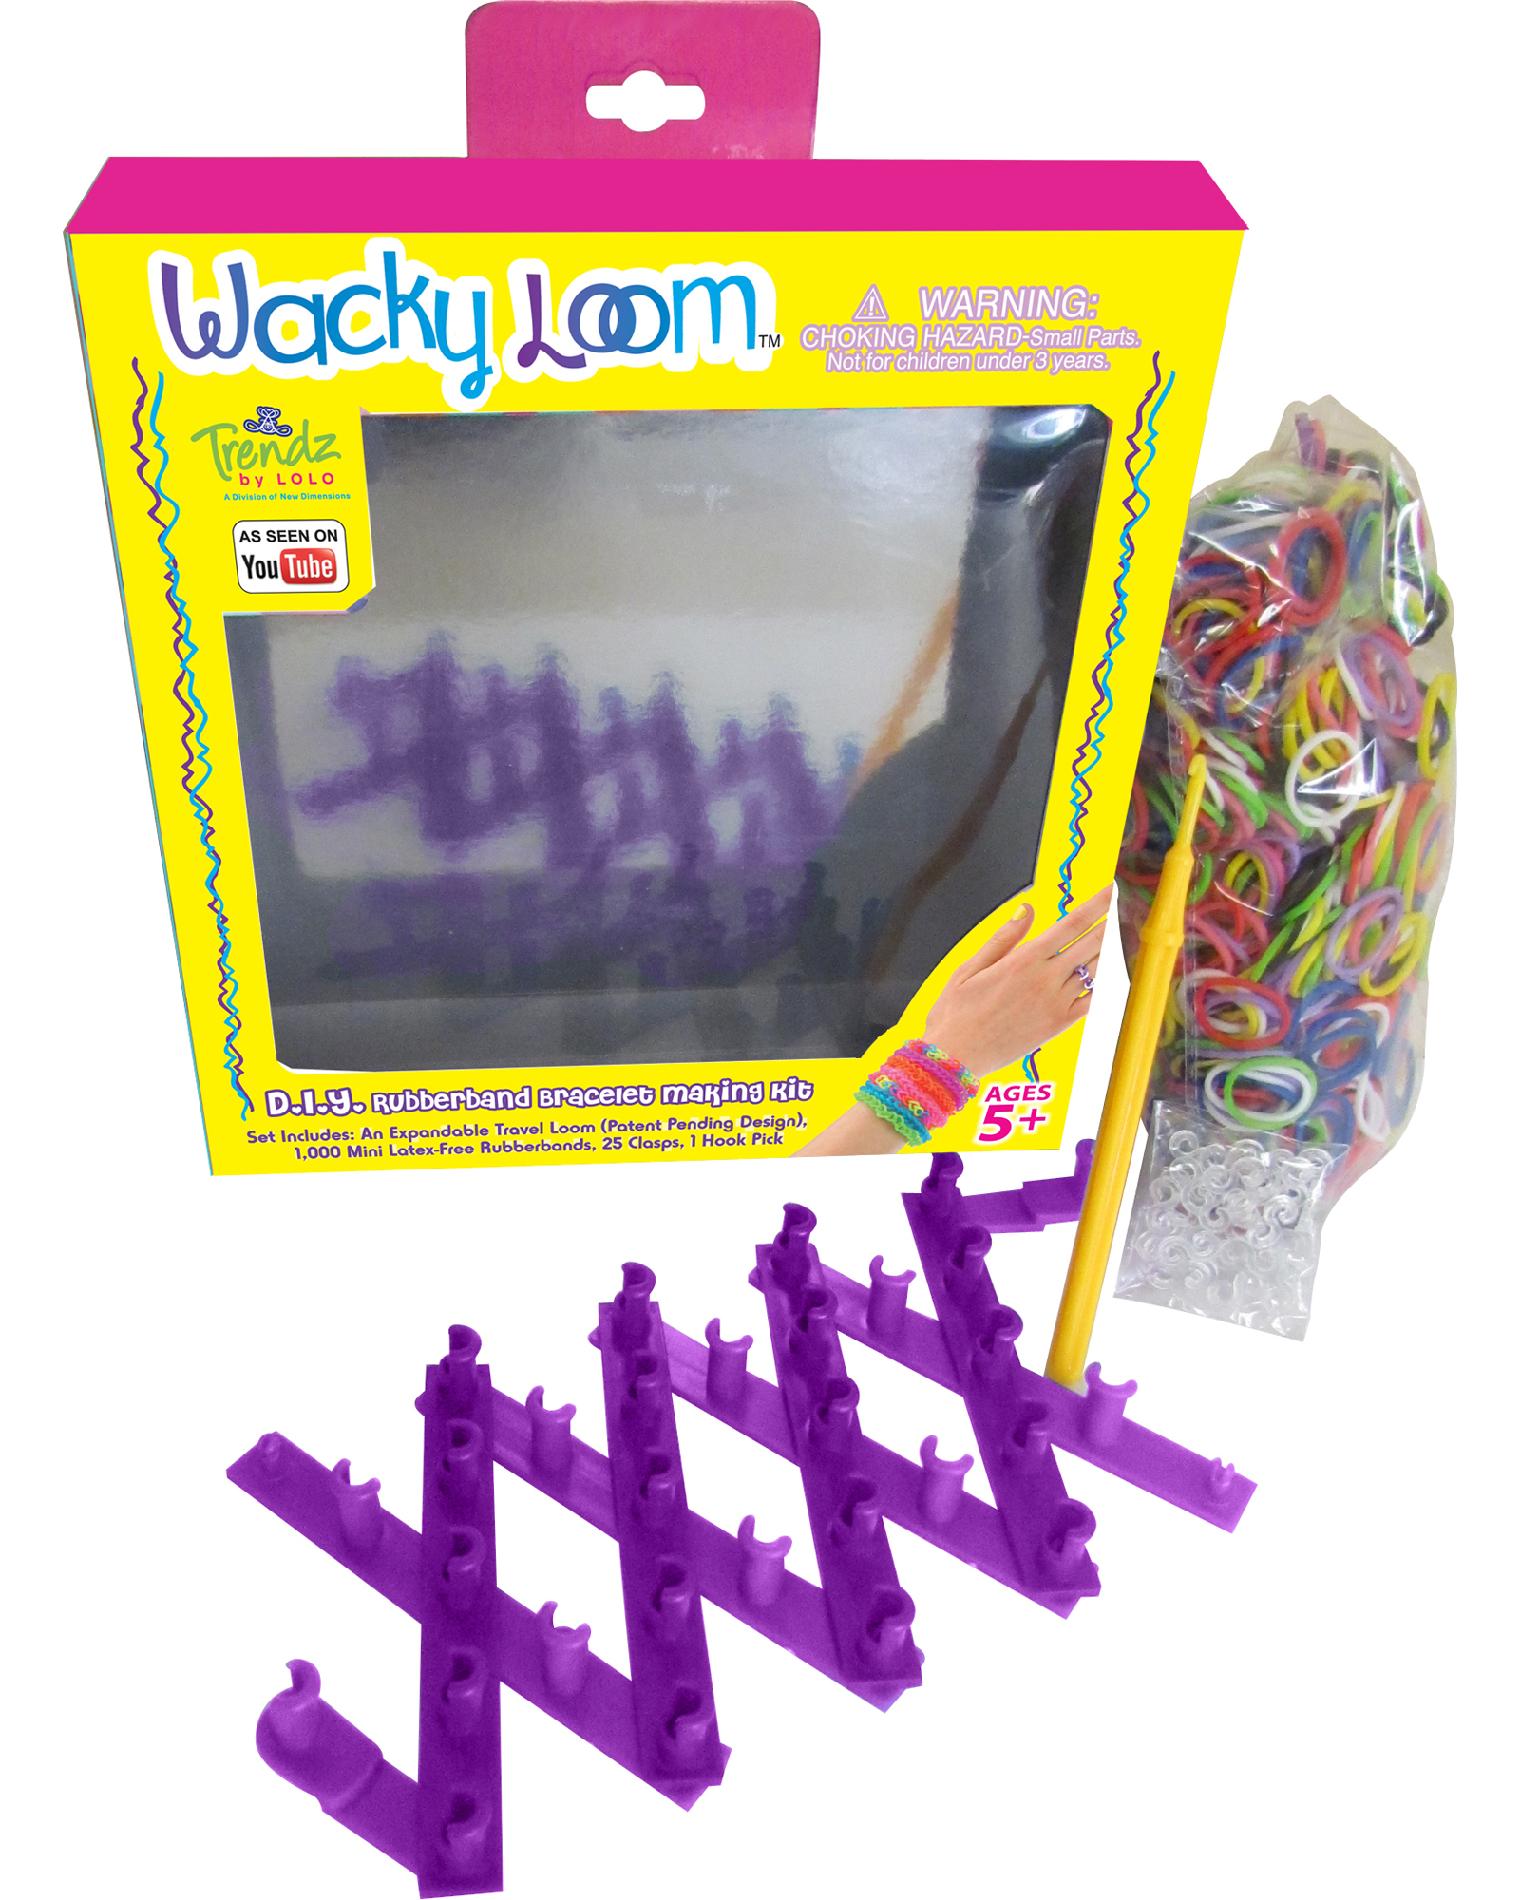 Wacky Loops Wacky Loom Kit—$6.99 (Fun Xmas Gift!)